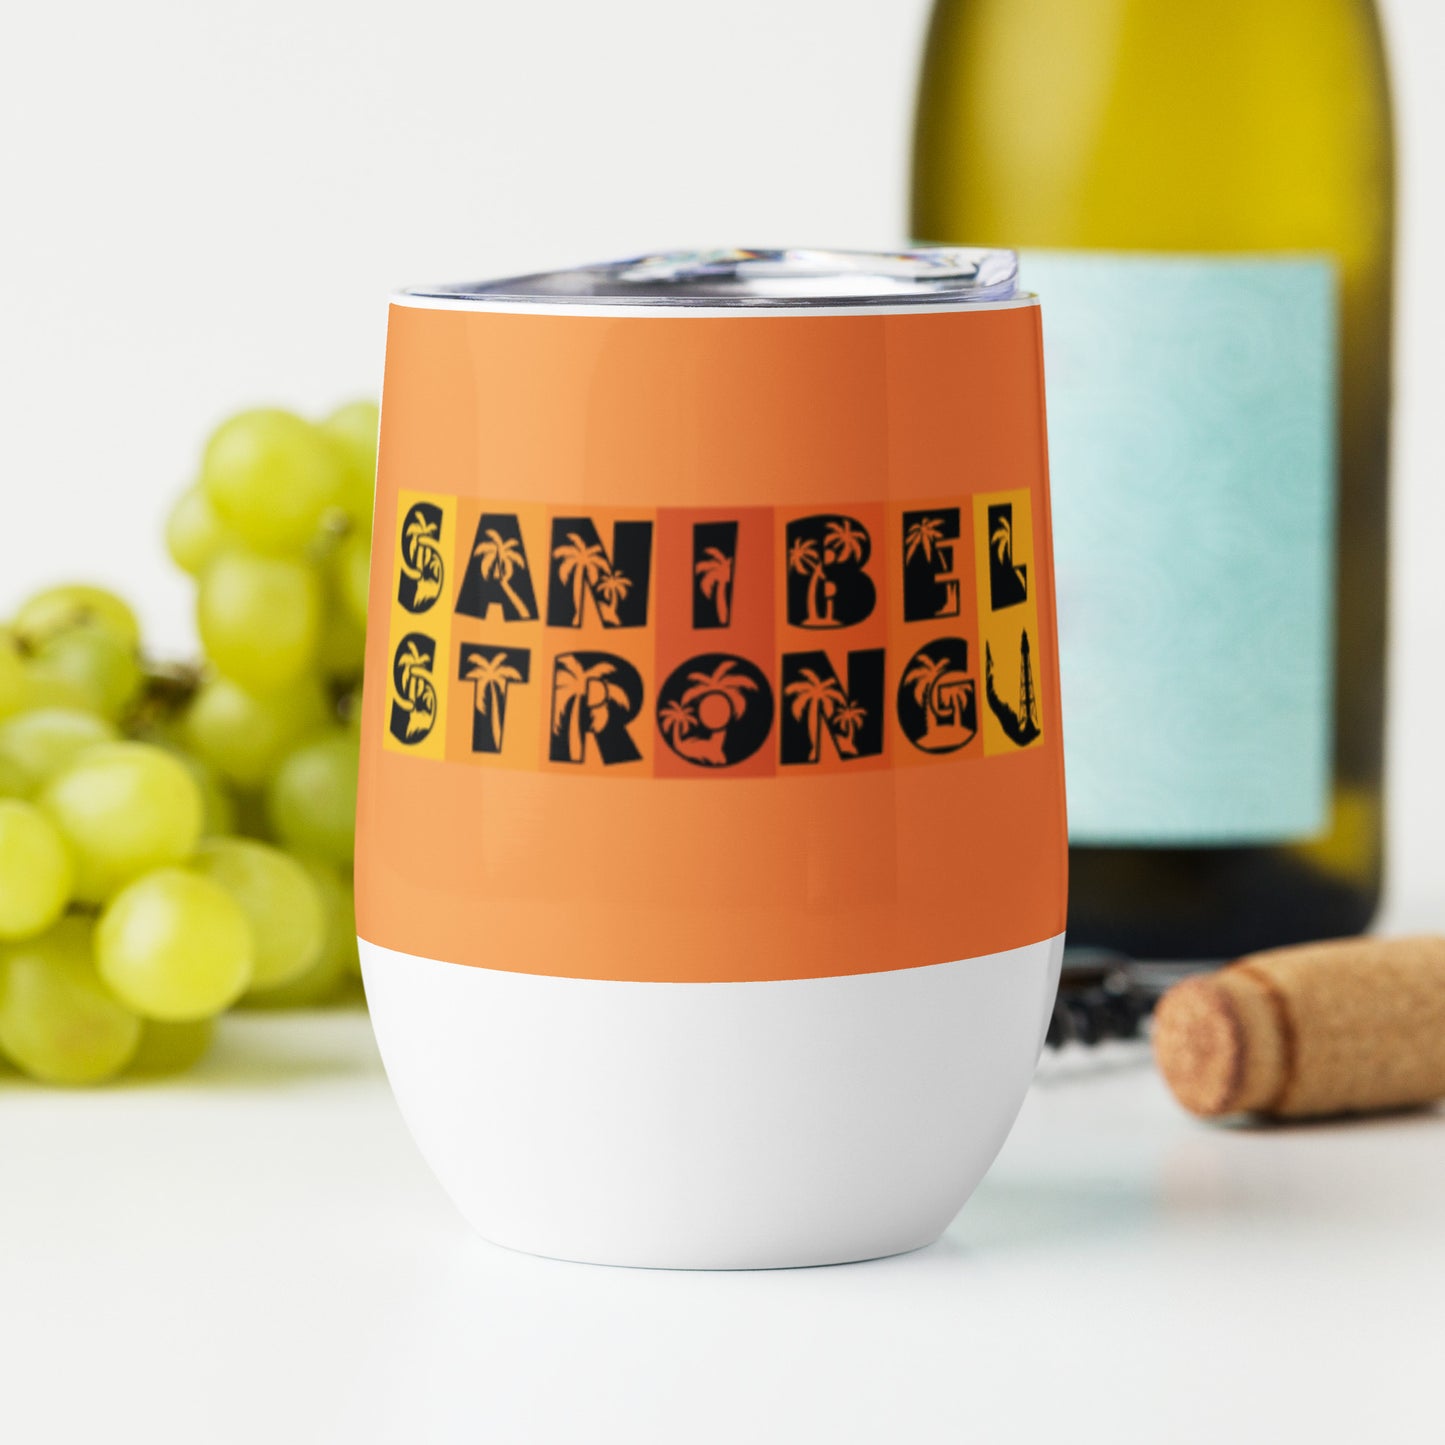 Sanibel Strong Wine Tumbler - Blue Design - Palm Tree Lettering